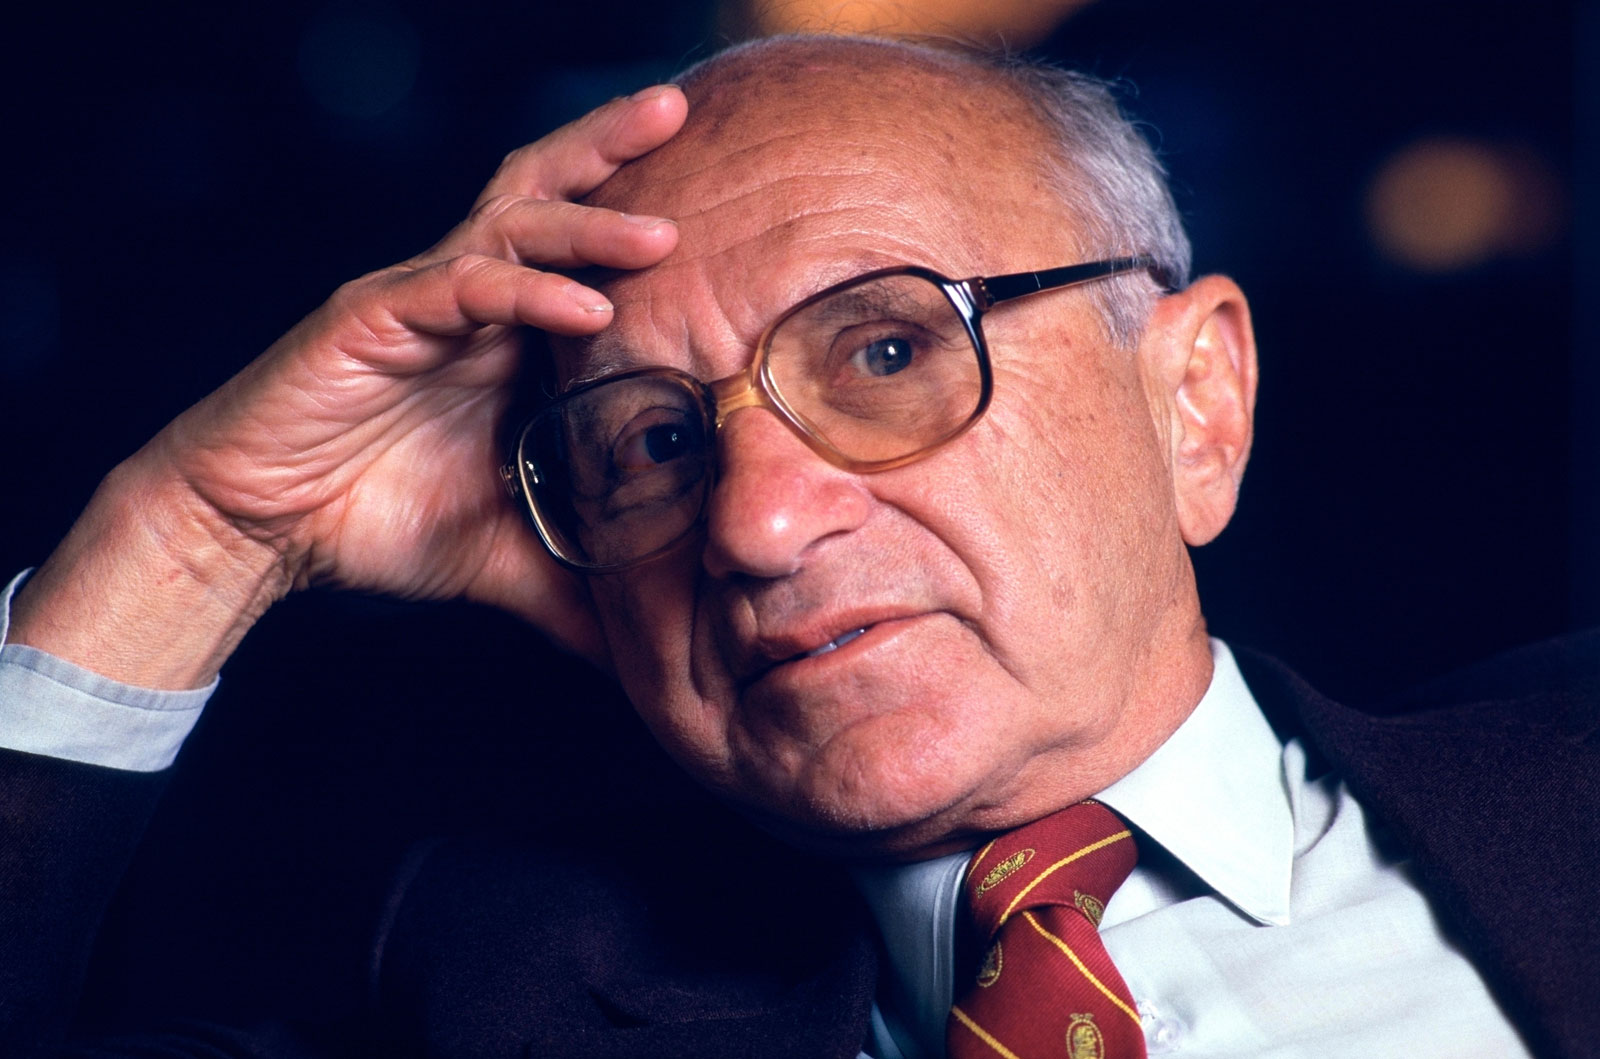 Economics Education - Milton Friedman